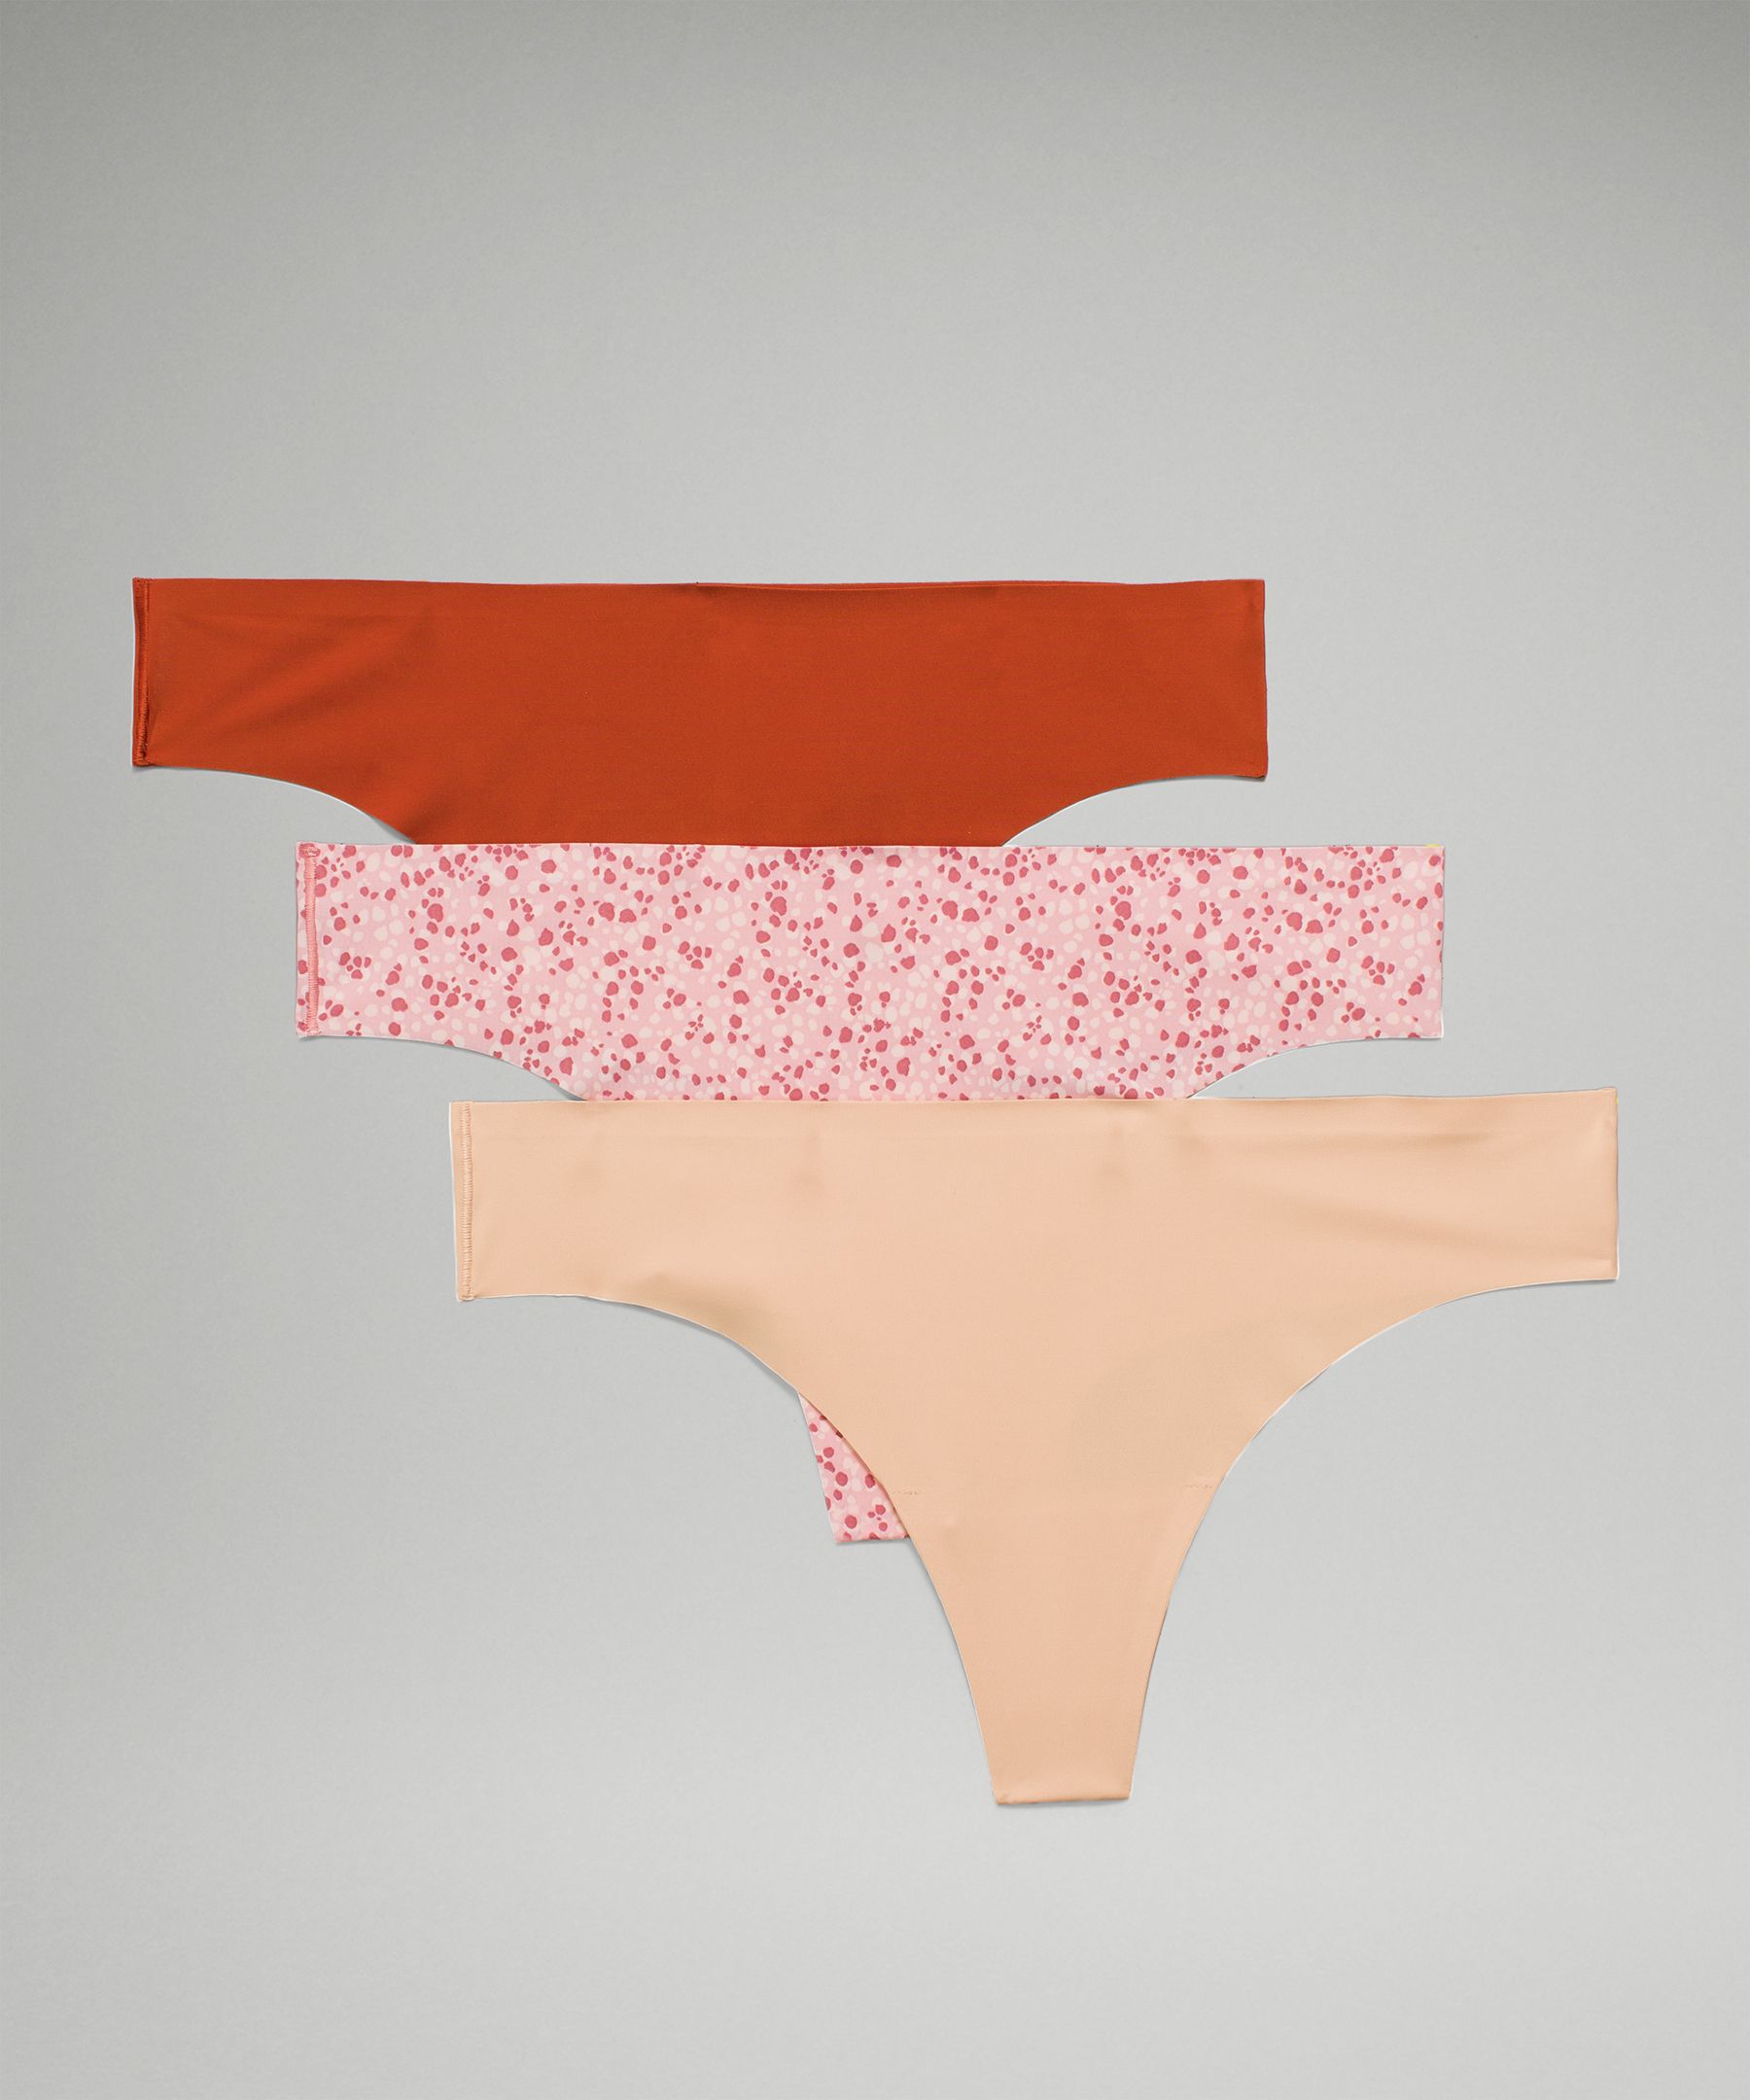 Lululemon Invisiwear Mid-rise Thong Underwear 3 Pack In Aztec Brick/bleached Apricot/scatter Petal Pink Rosebud Pink Mist Brier Rose